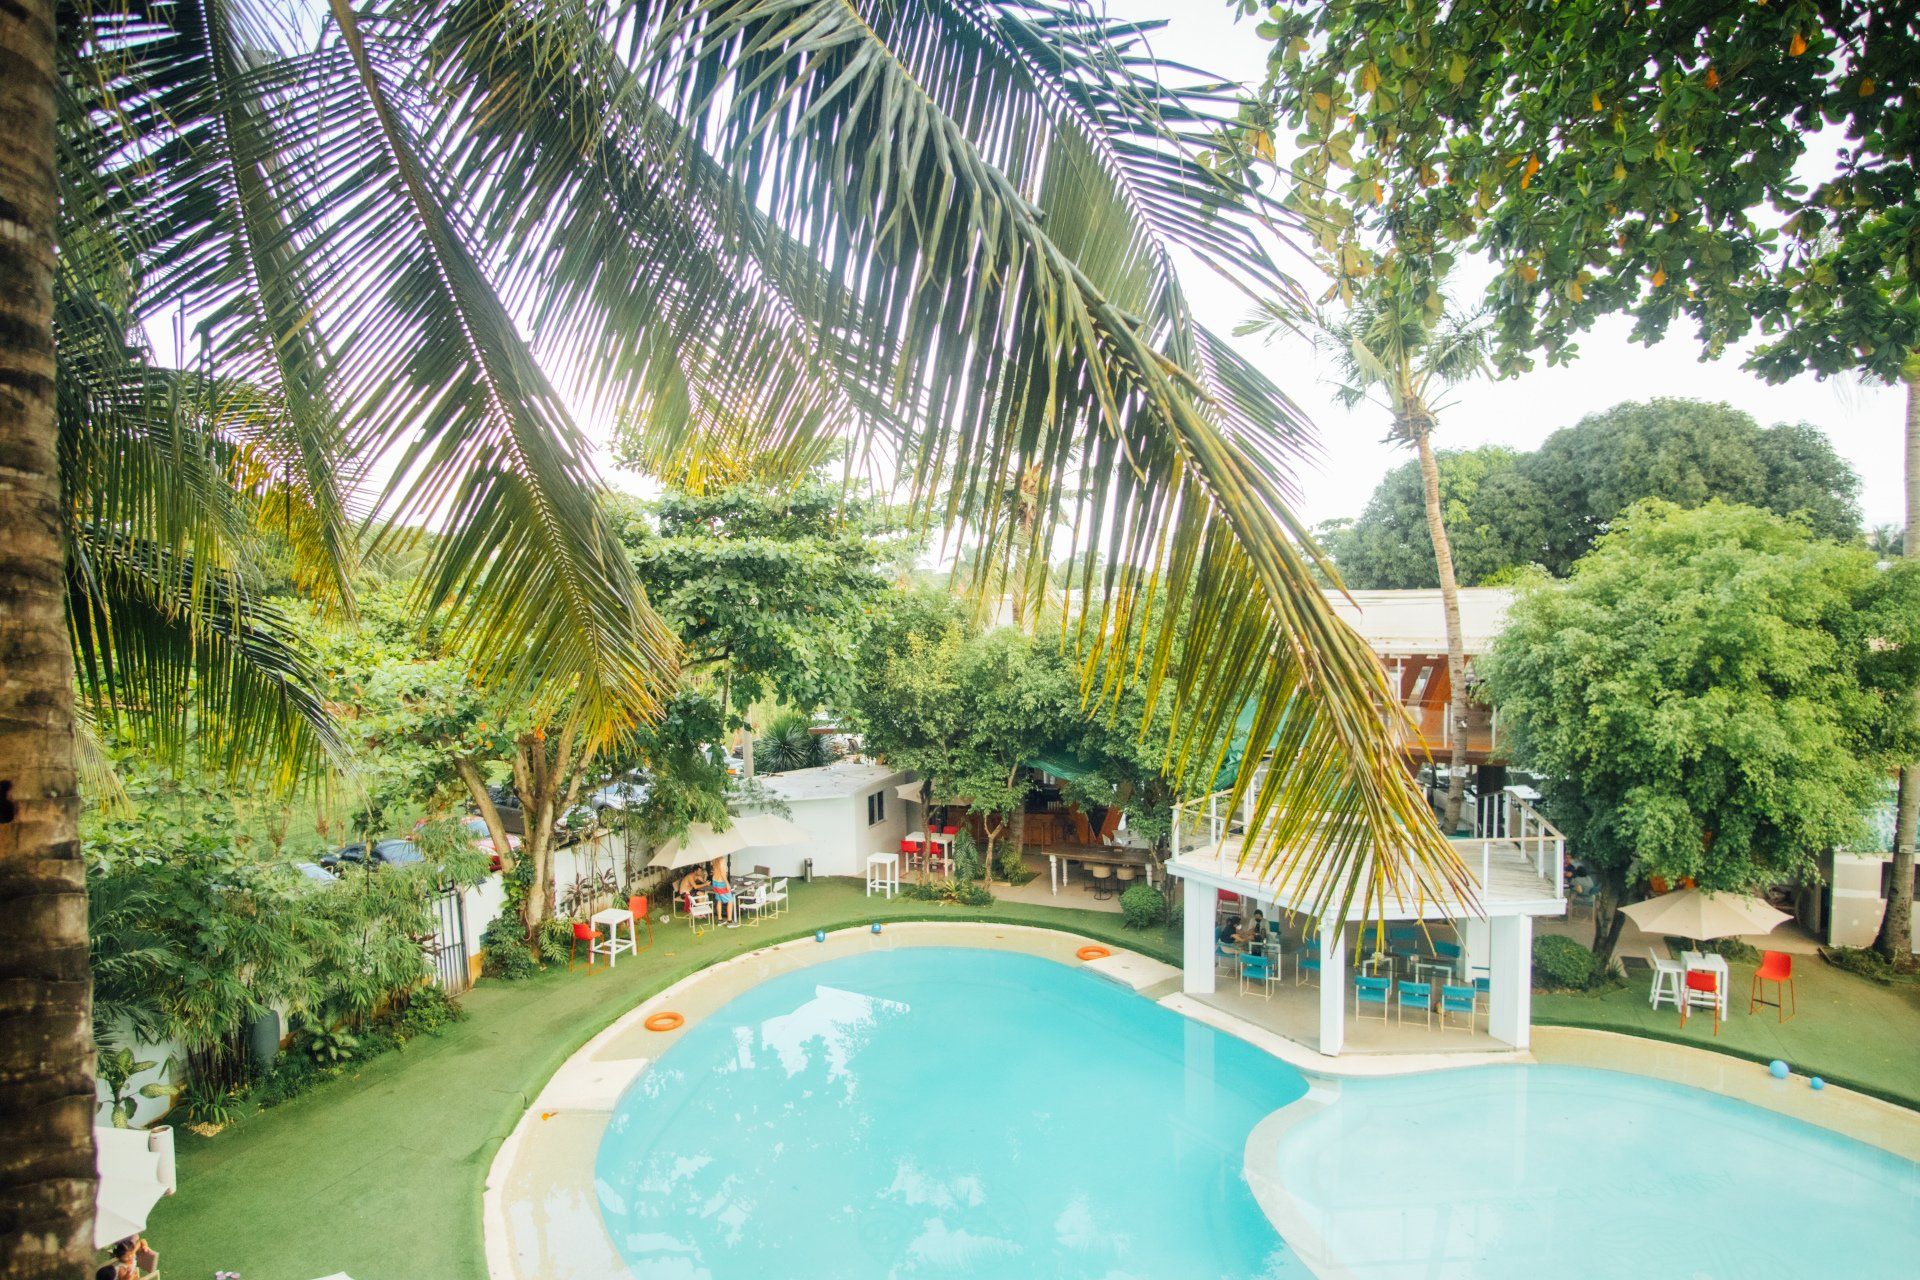 Swimming Pool - Gravity Cocktail Lounge Ristorante La Piccola Roma Asmara Urban Resort & Lifestyle Village Cebu